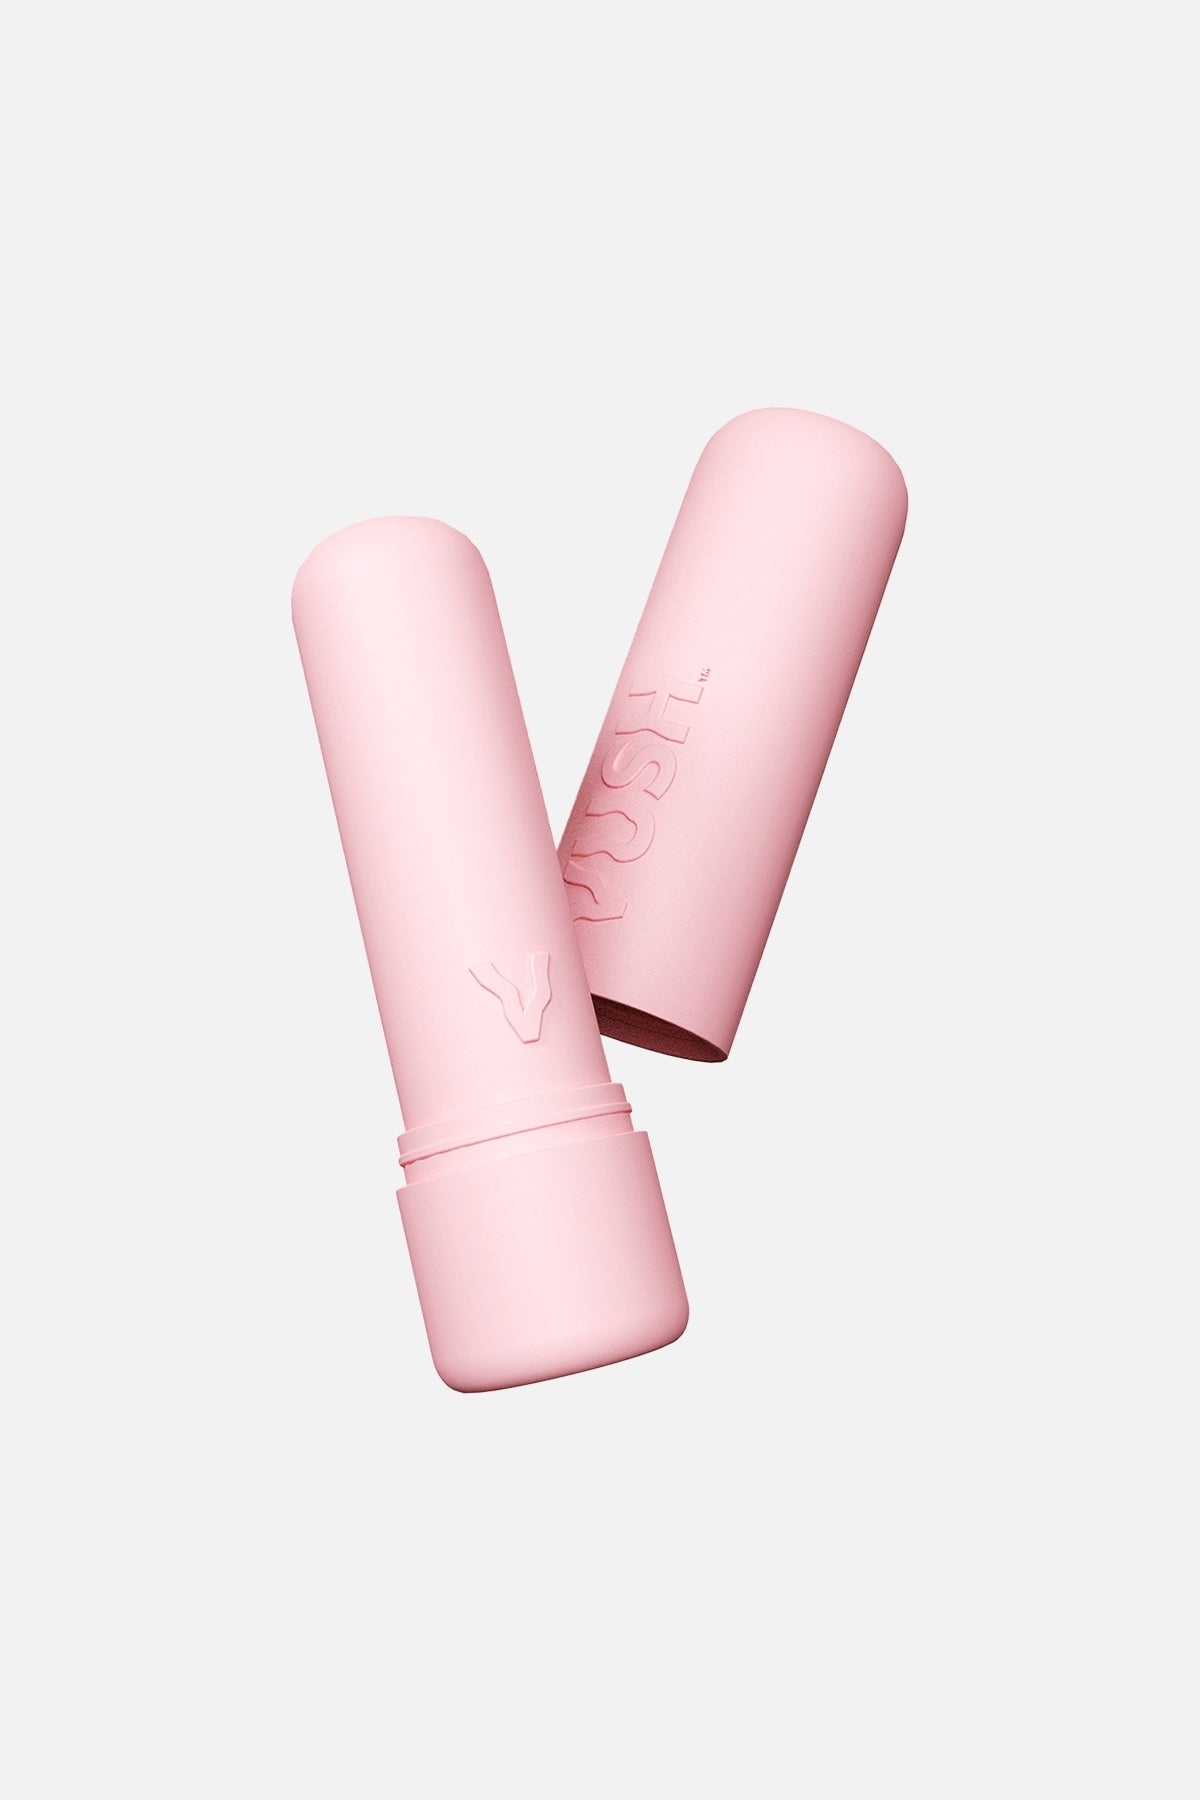 Vush Gloss Bullet Vibrator Pink